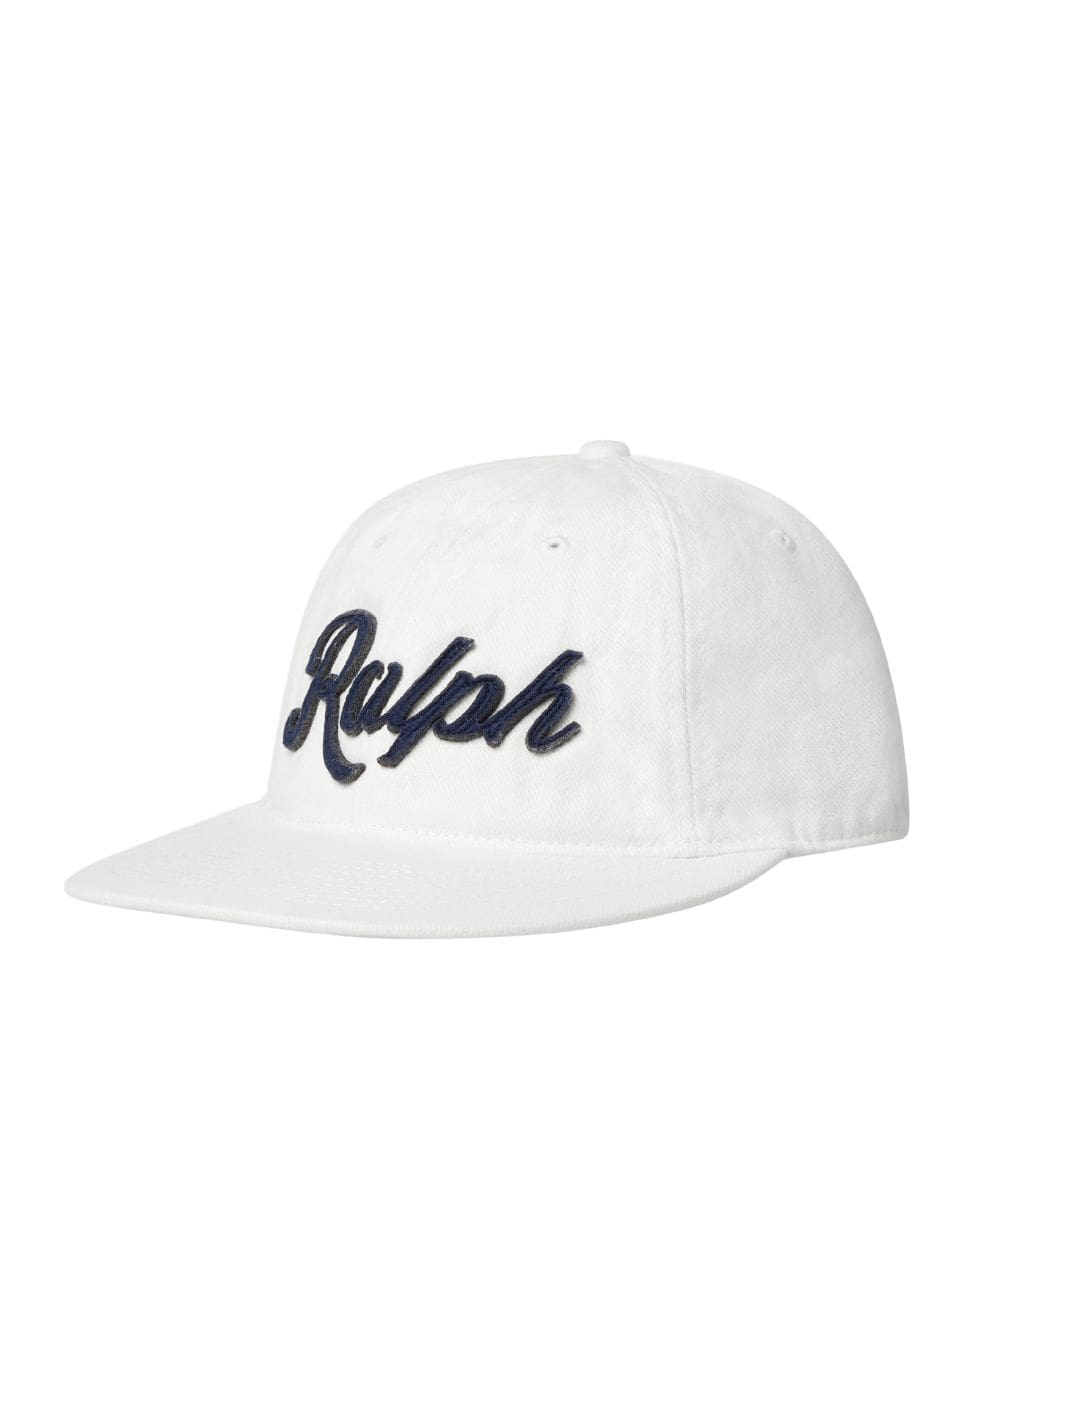 Polo Ralph Lauren Accessories Caps | Twill Ball Cap White